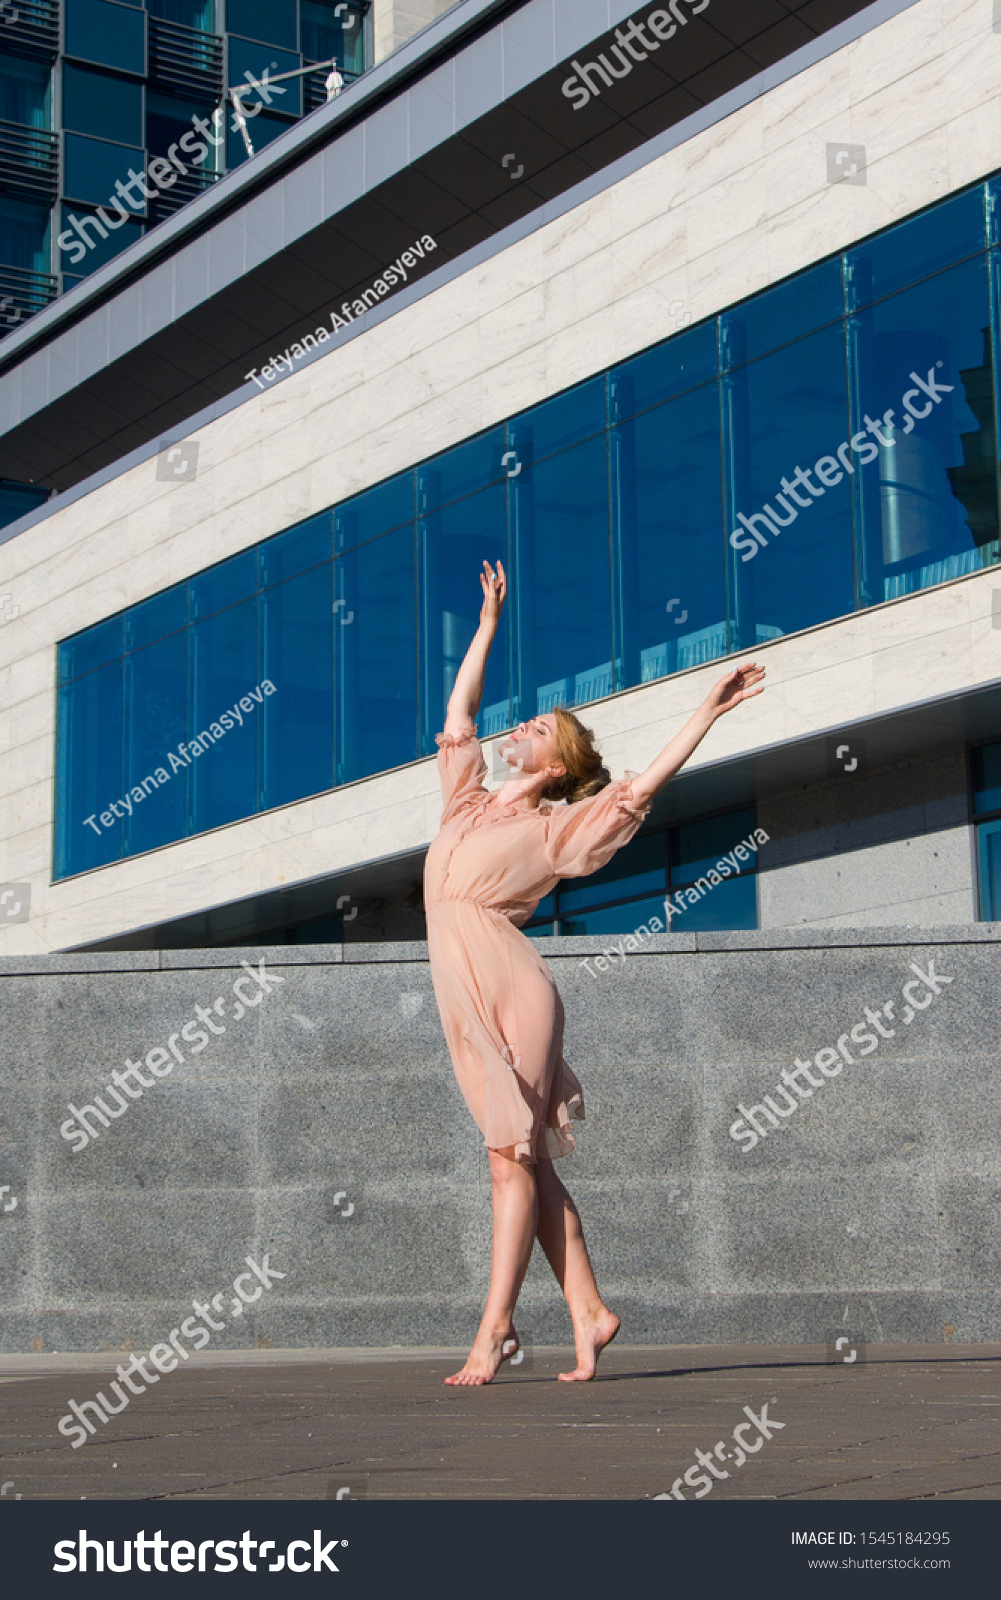 Ballerina in light dresses dancing on a street background of a modern glass building business center #1545184295